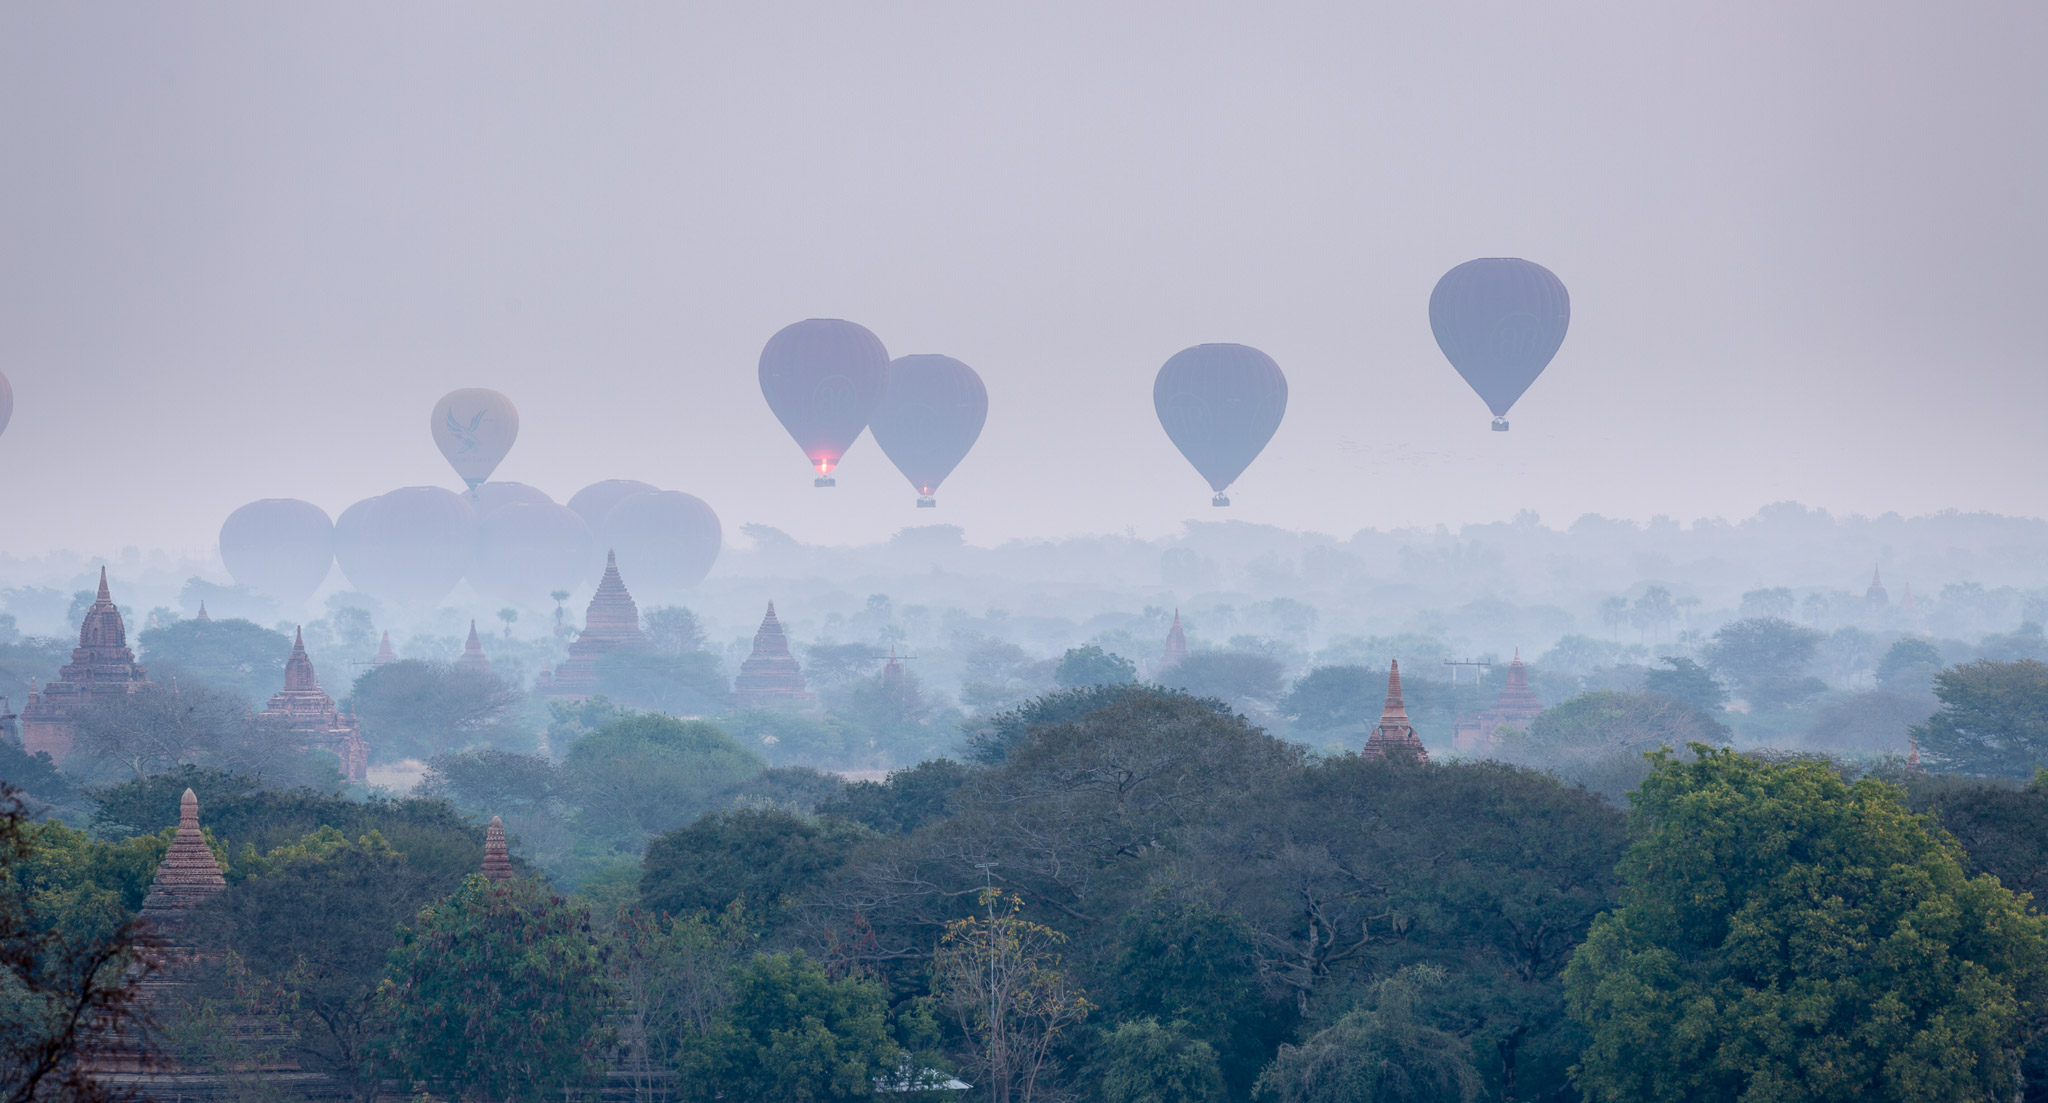 Sunrise hot air balloons over Bagan